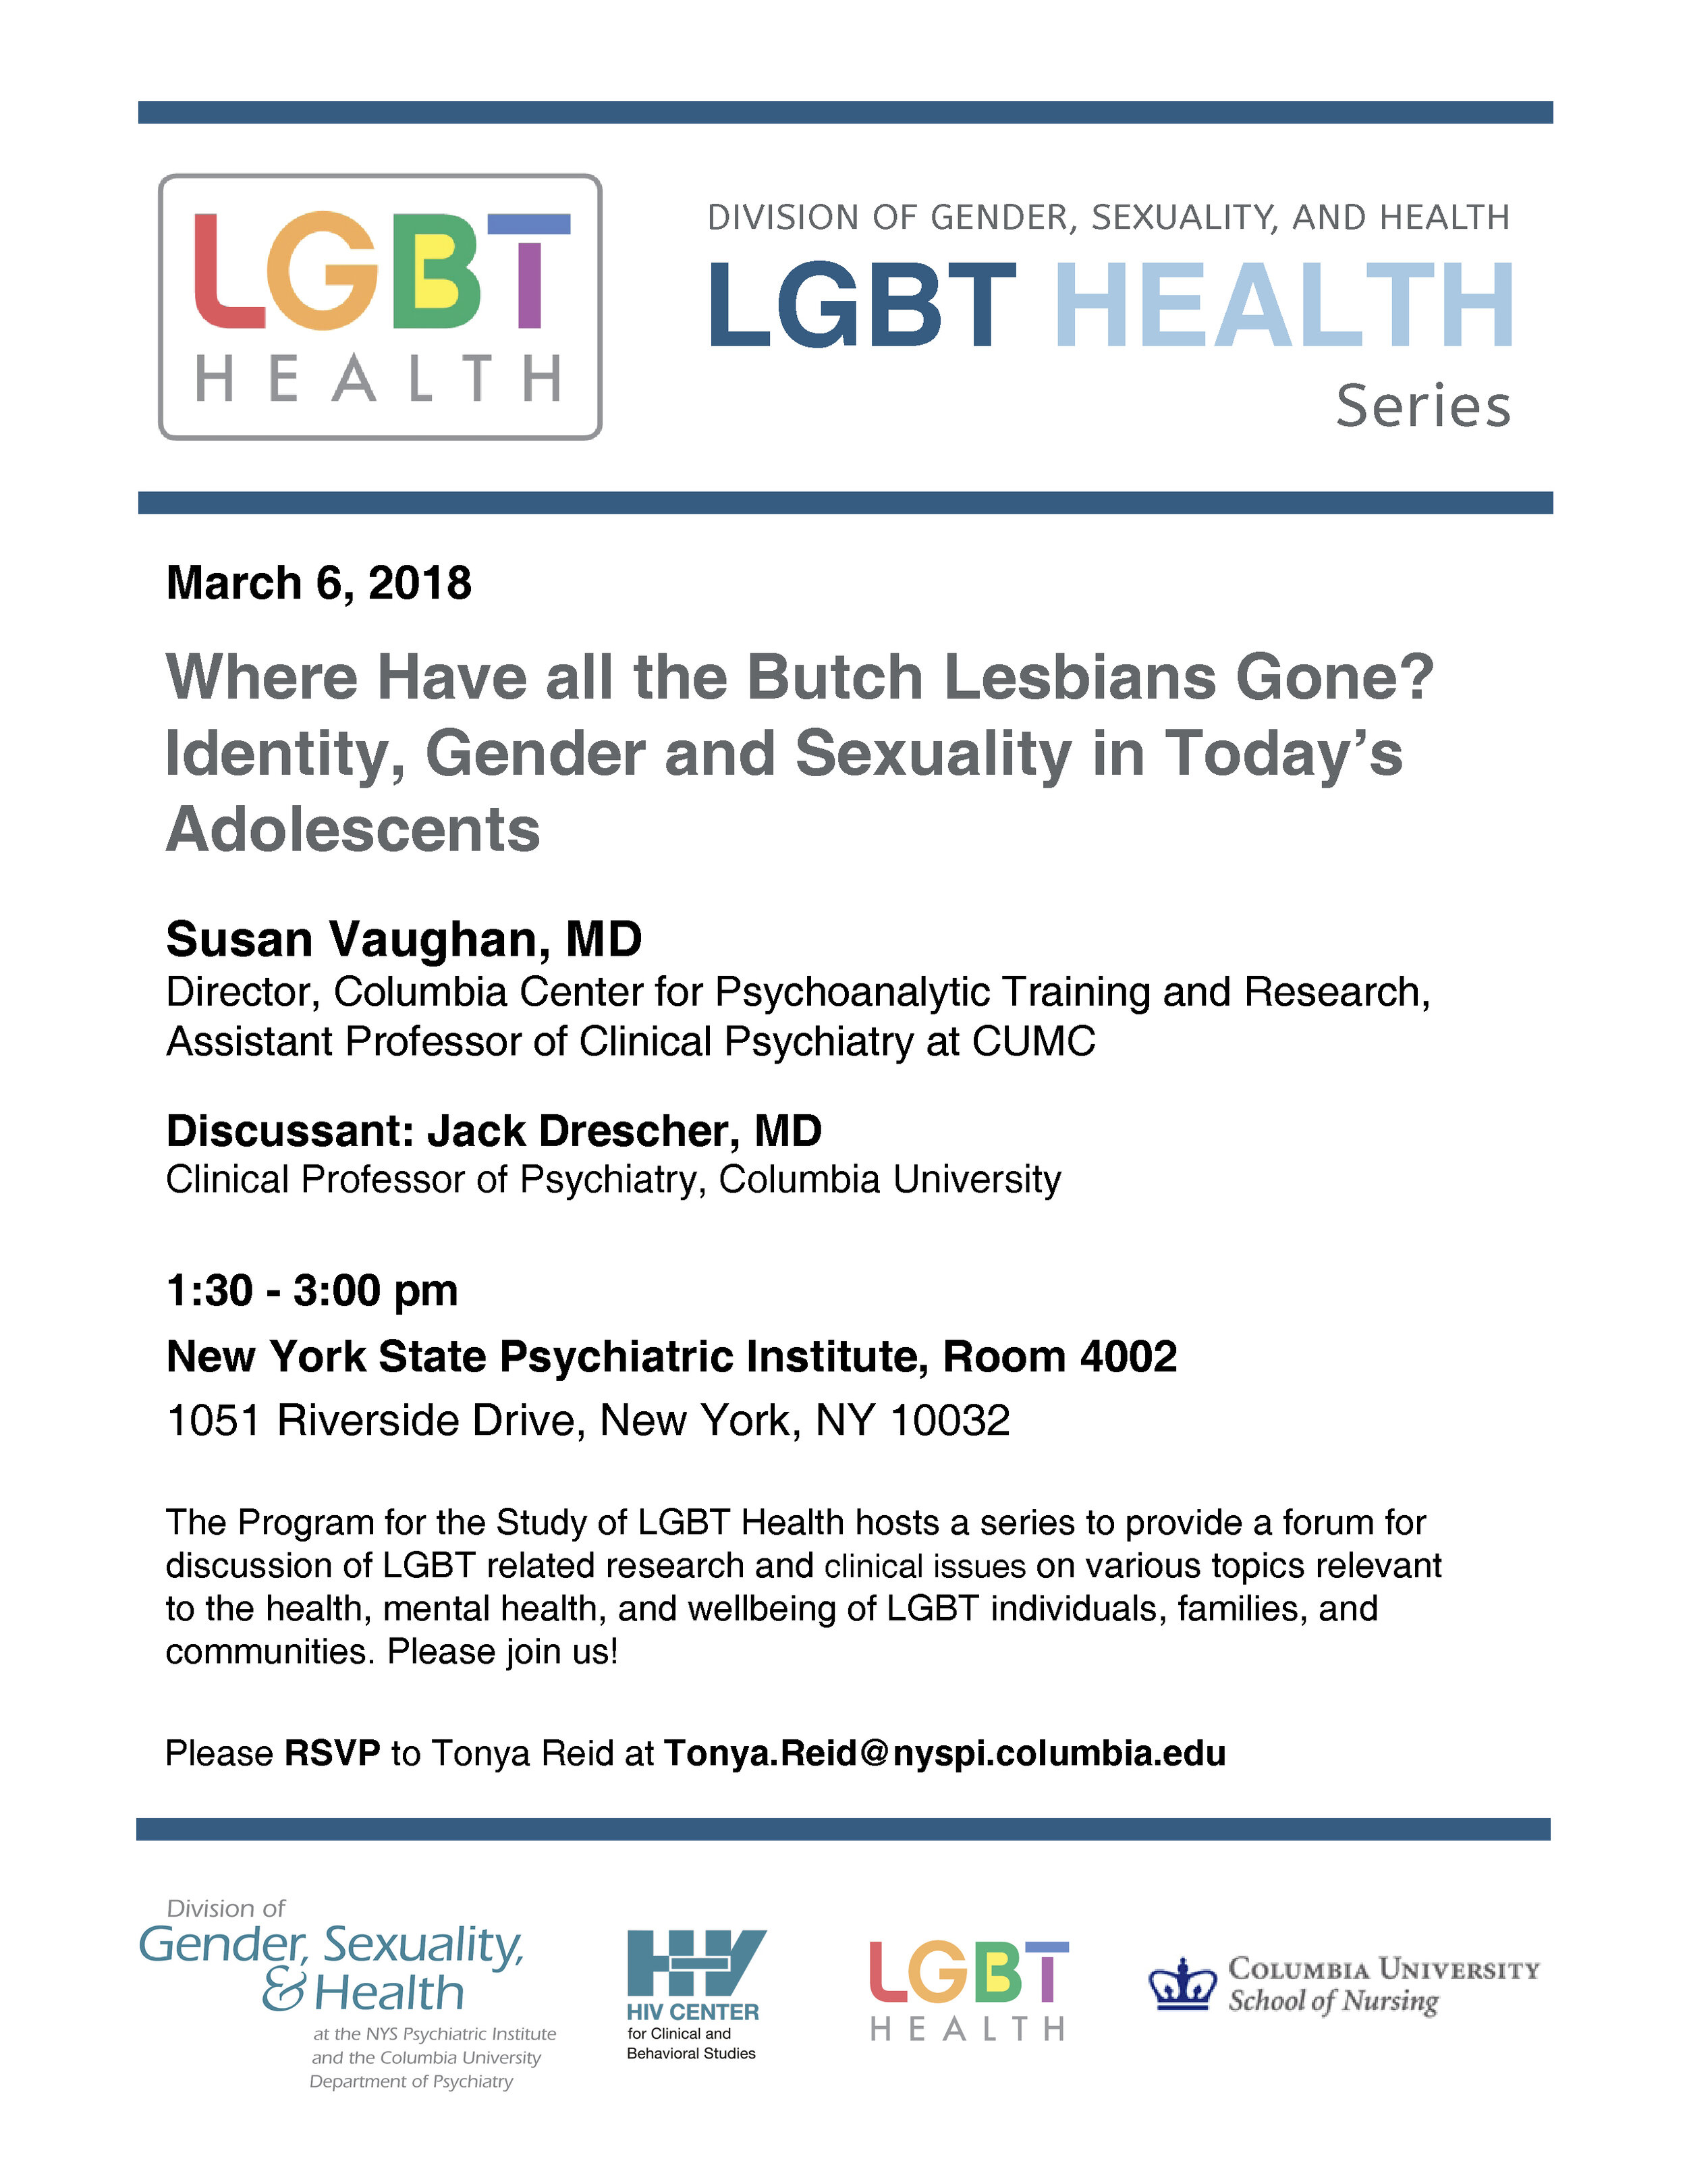 LGBT Health Series March 6 2018.jpg